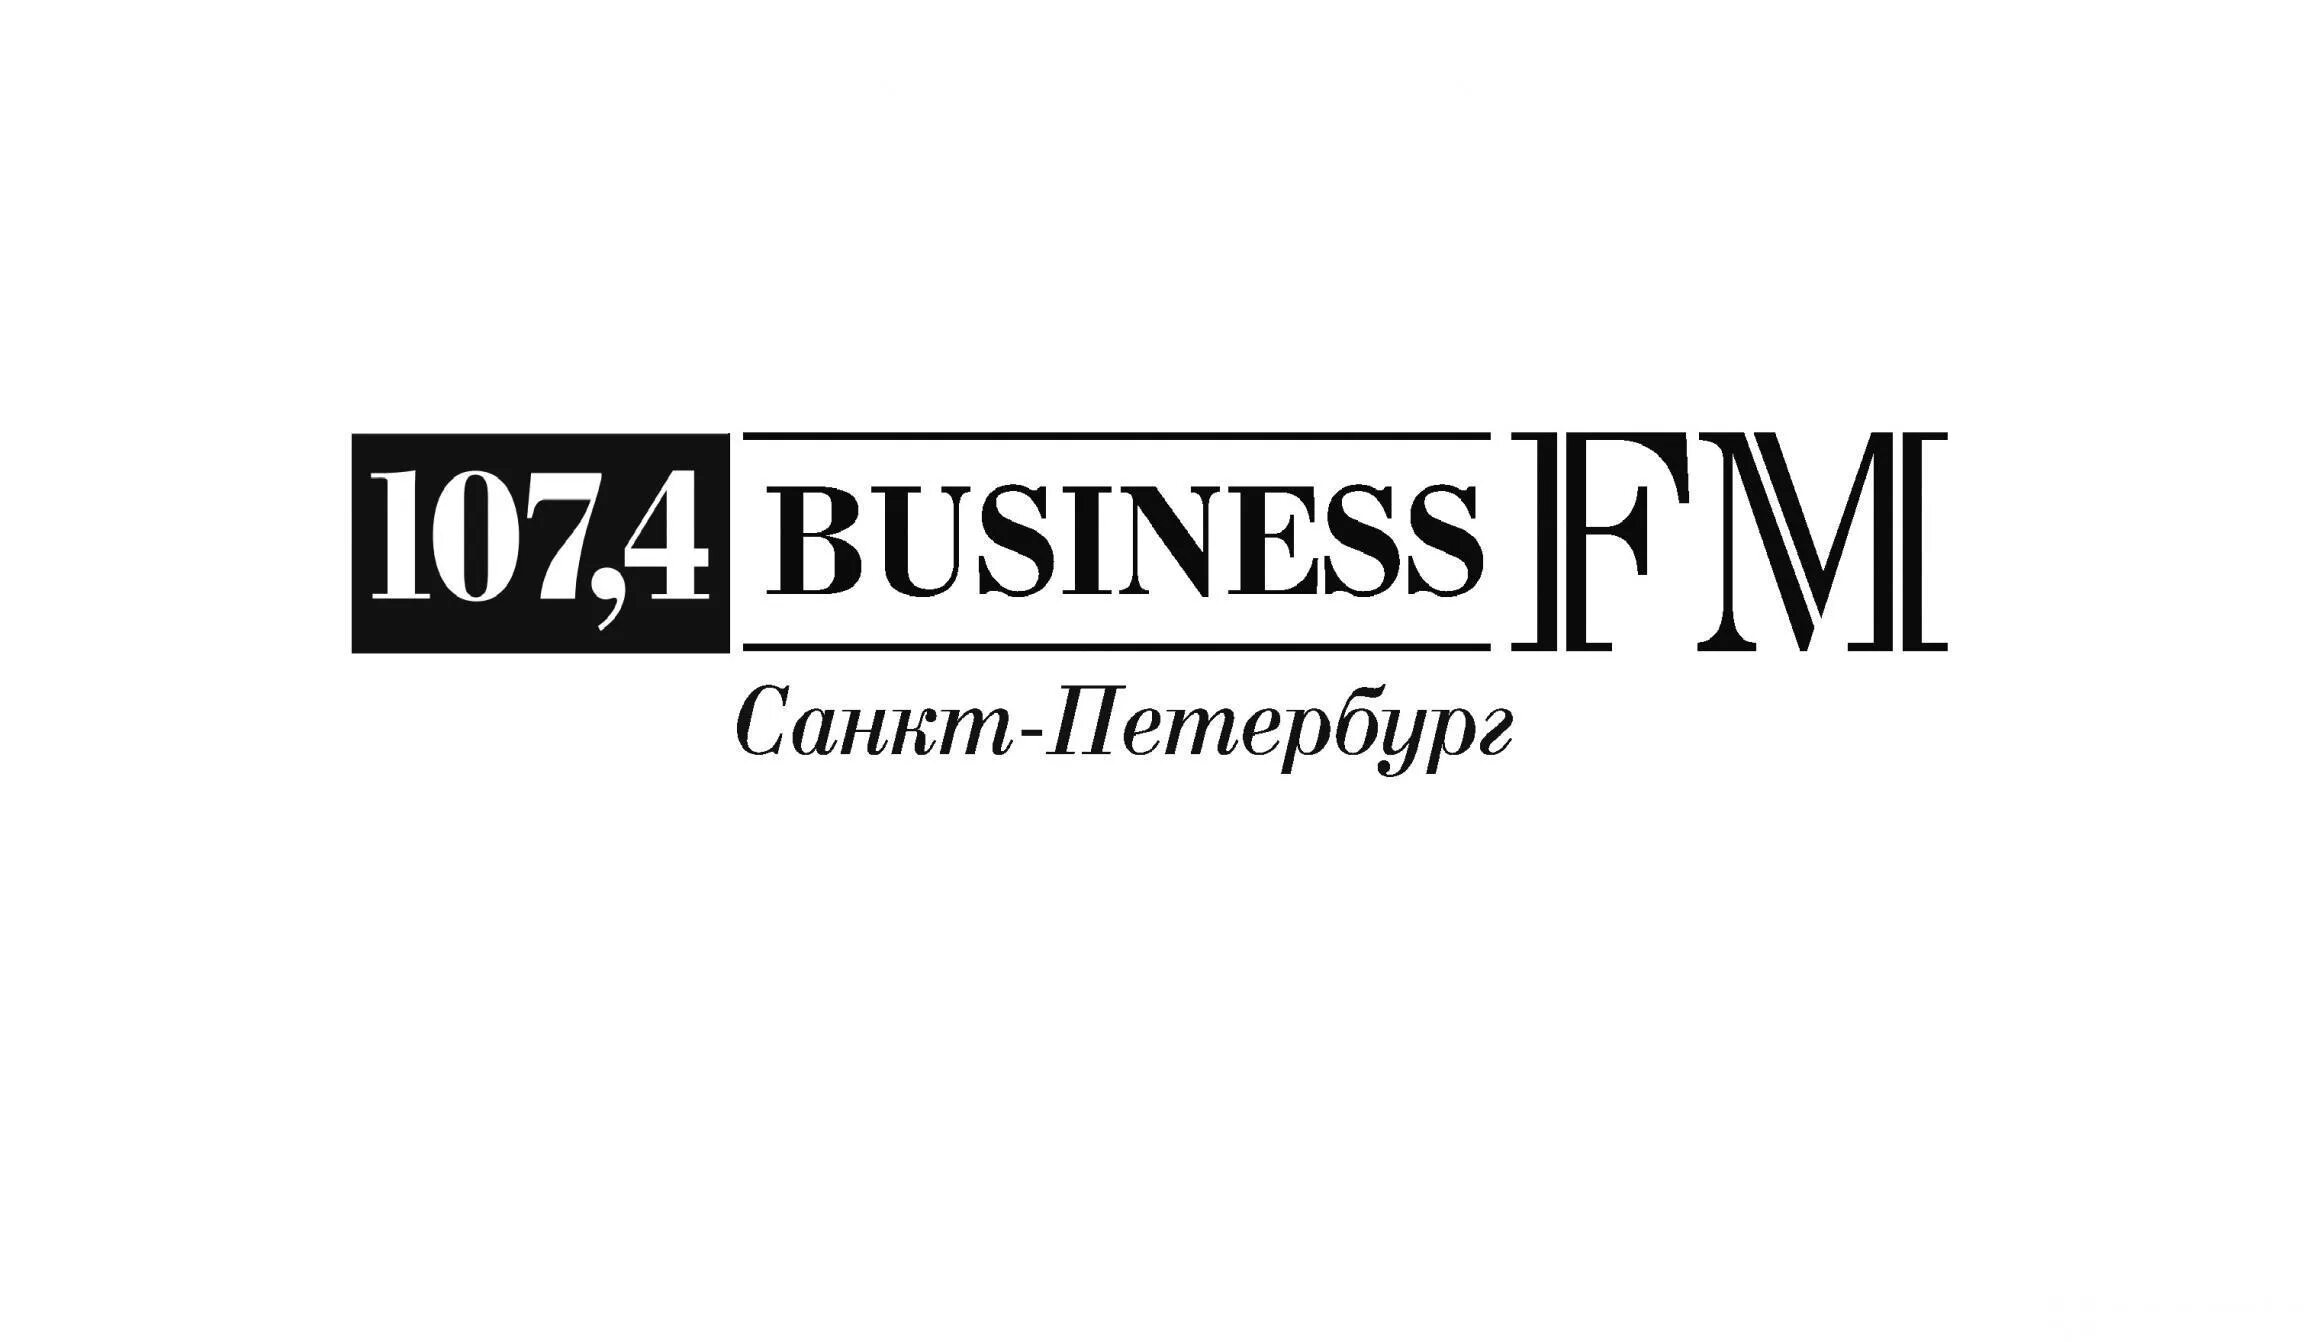 Радио бизнес фм прямой эфир. Бизнес fm. Радио бизнес ФМ. Бизнес fm логотип. Business fm Санкт-Петербург.